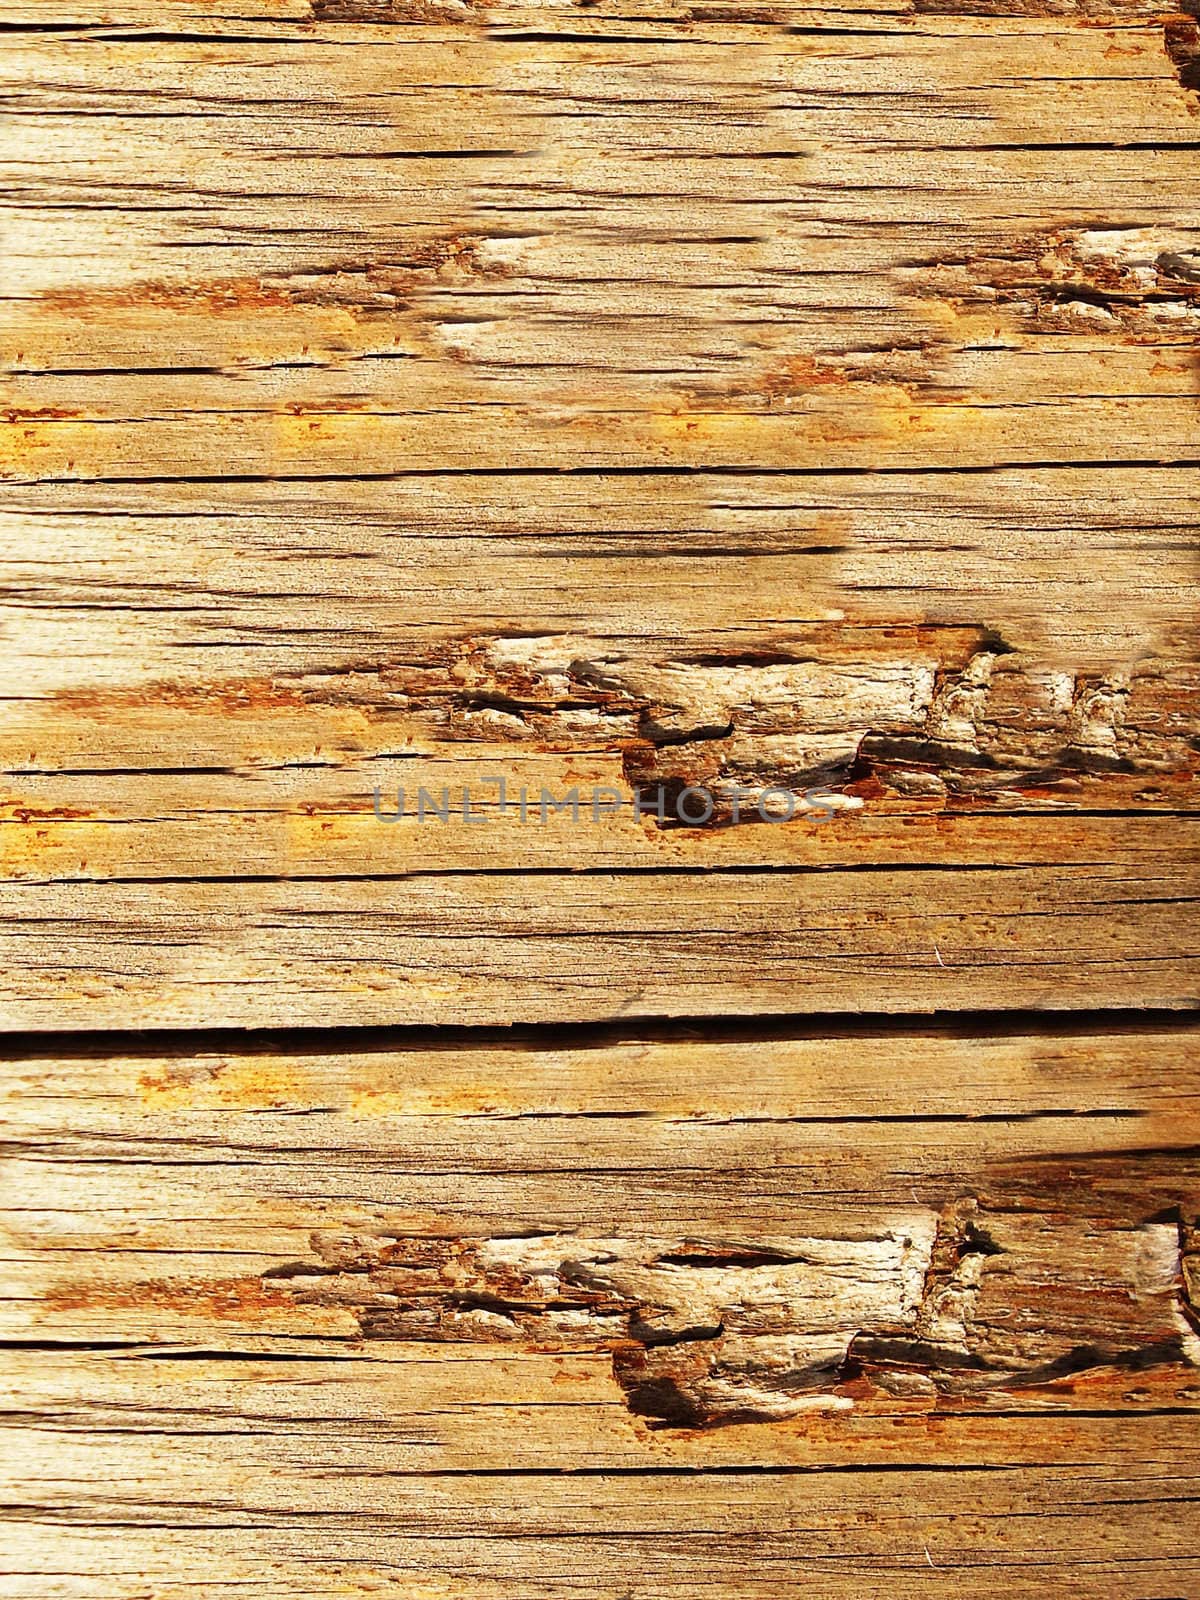 High resolution natural wood grain texture       